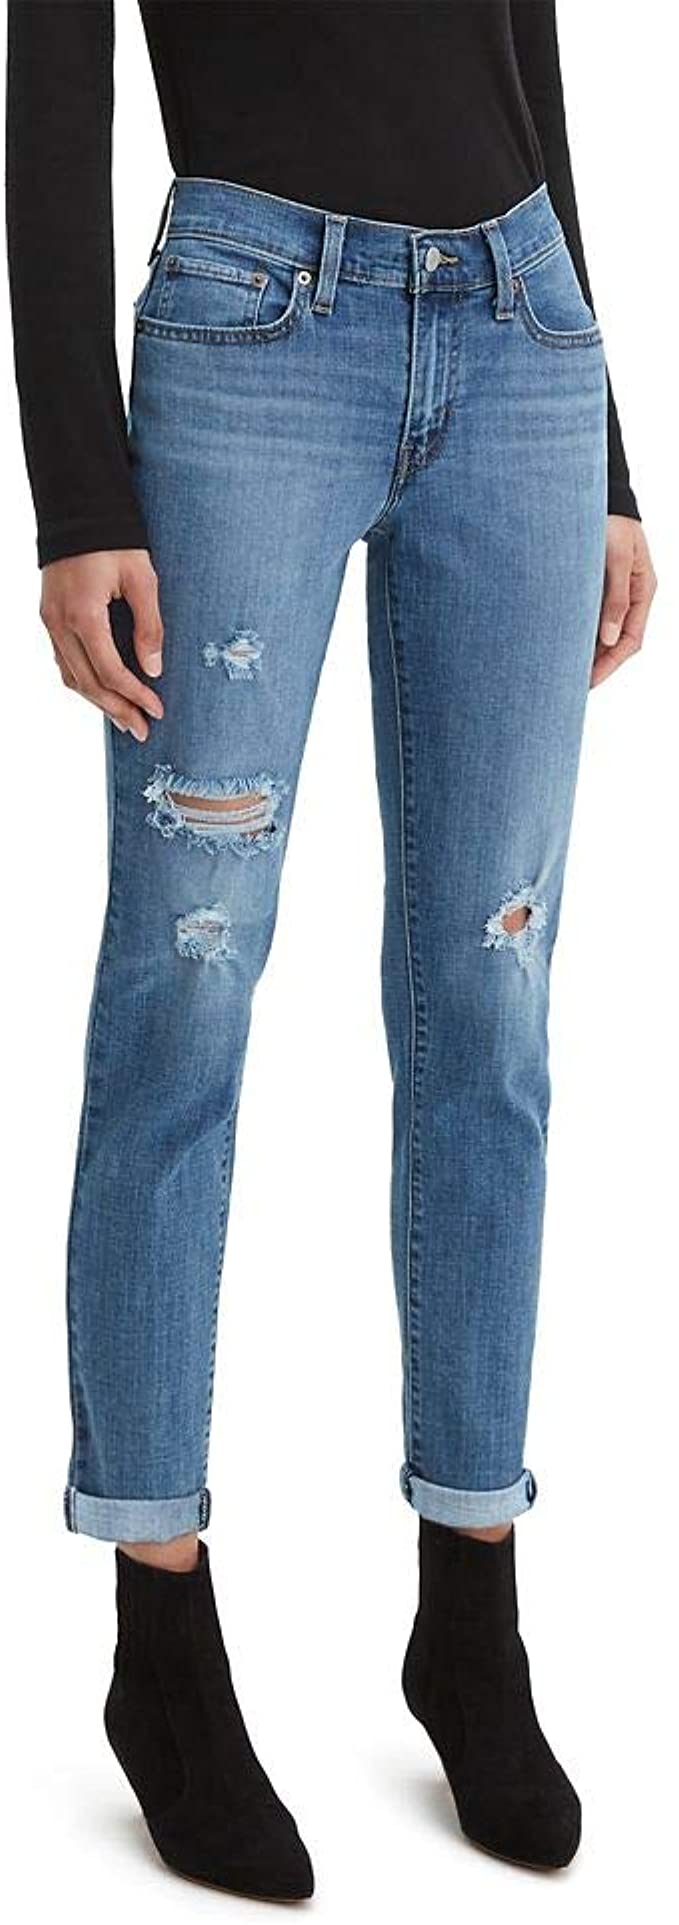 best black friday deals on jeans